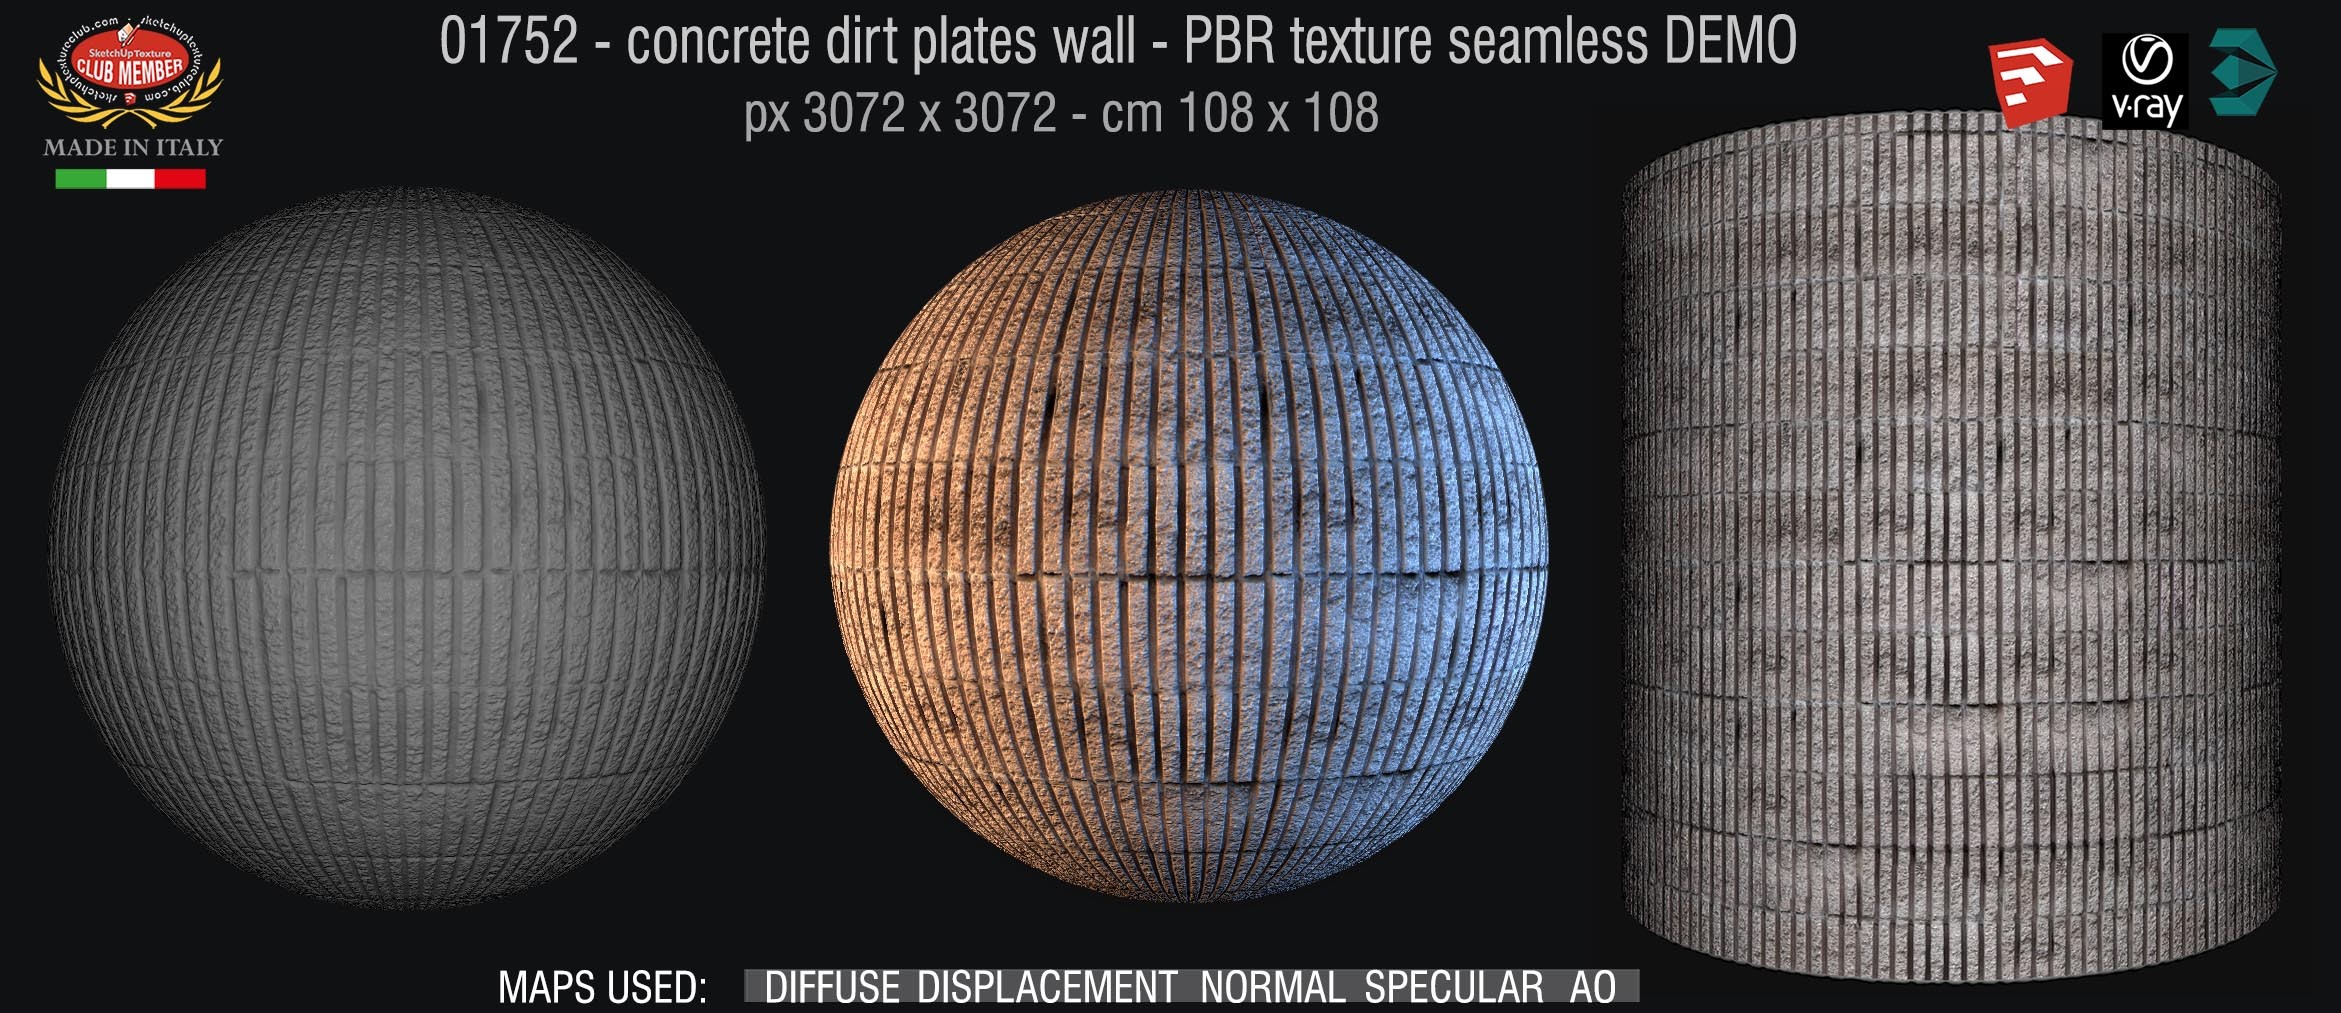 01752 concrete dirt plates wall PBR texture seamless DEMO